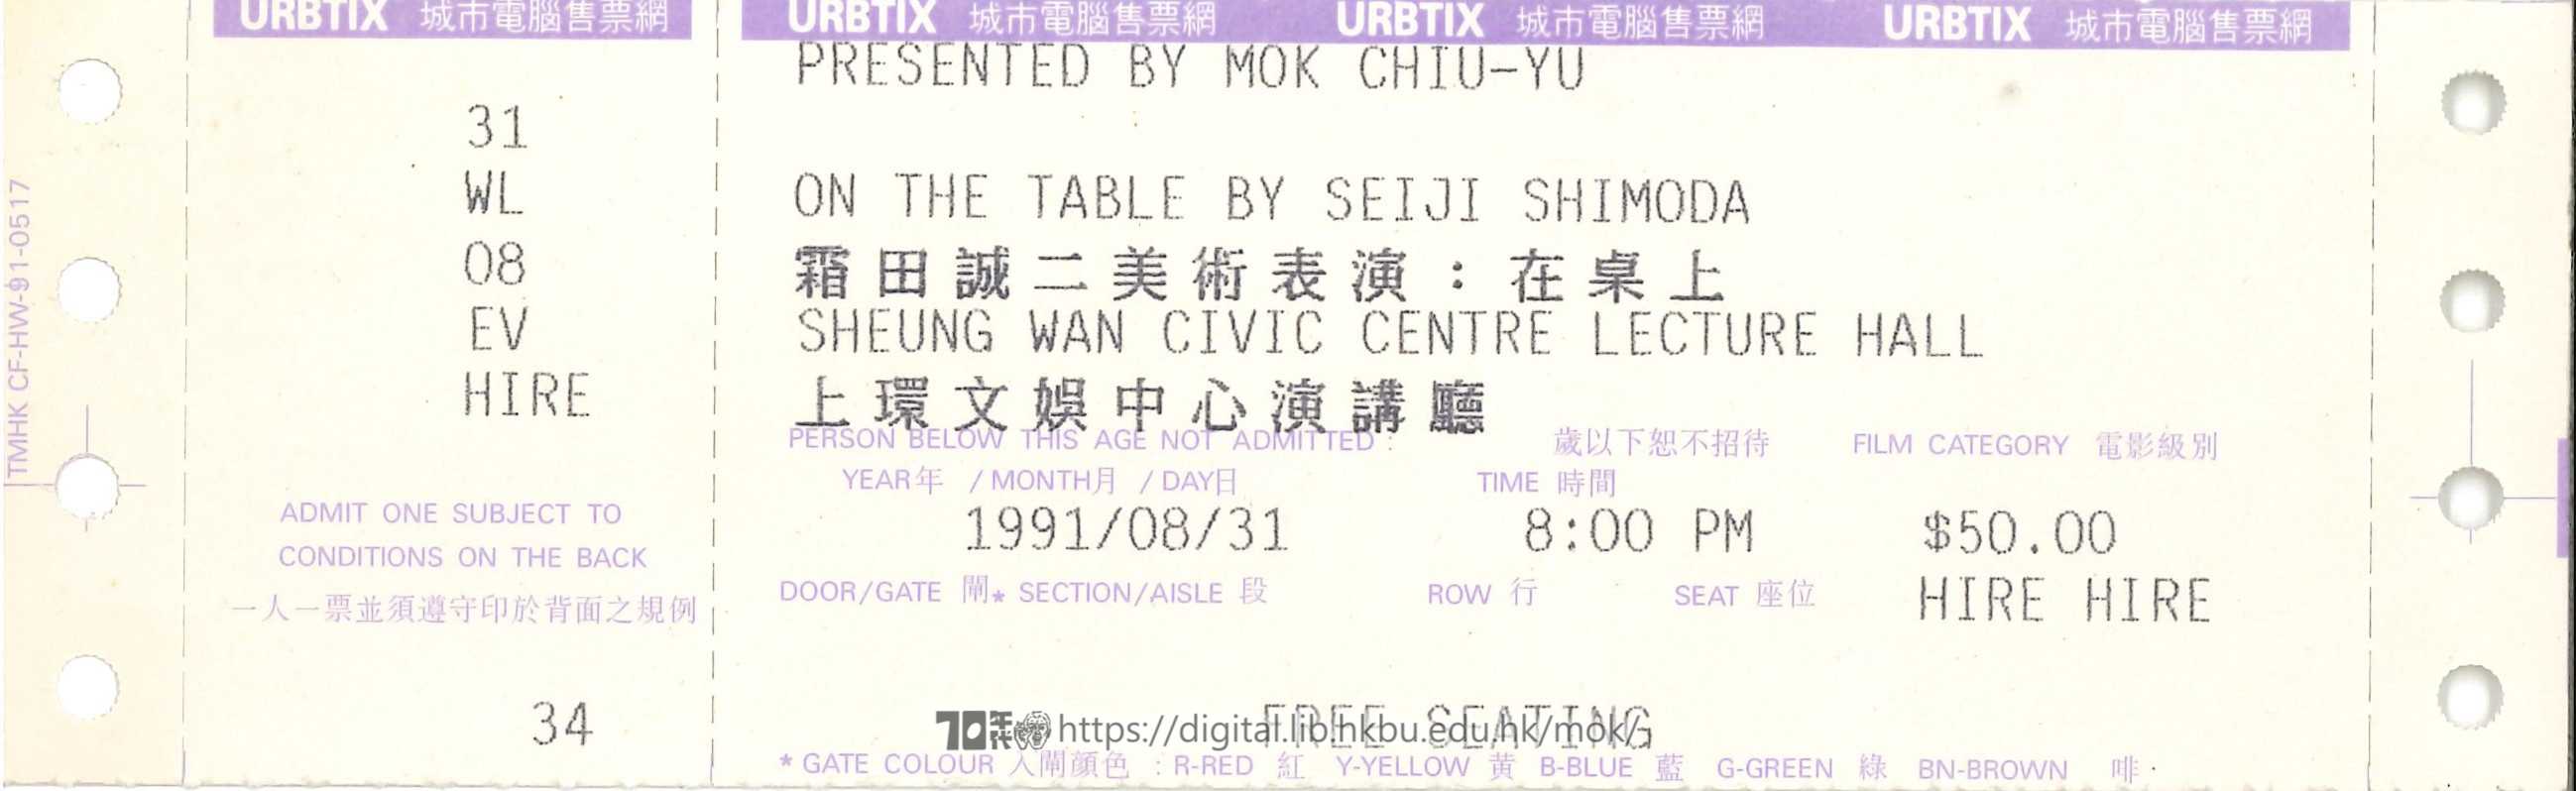 Community theatre  Ticket to 1991 performance by Seiji Shimoda  